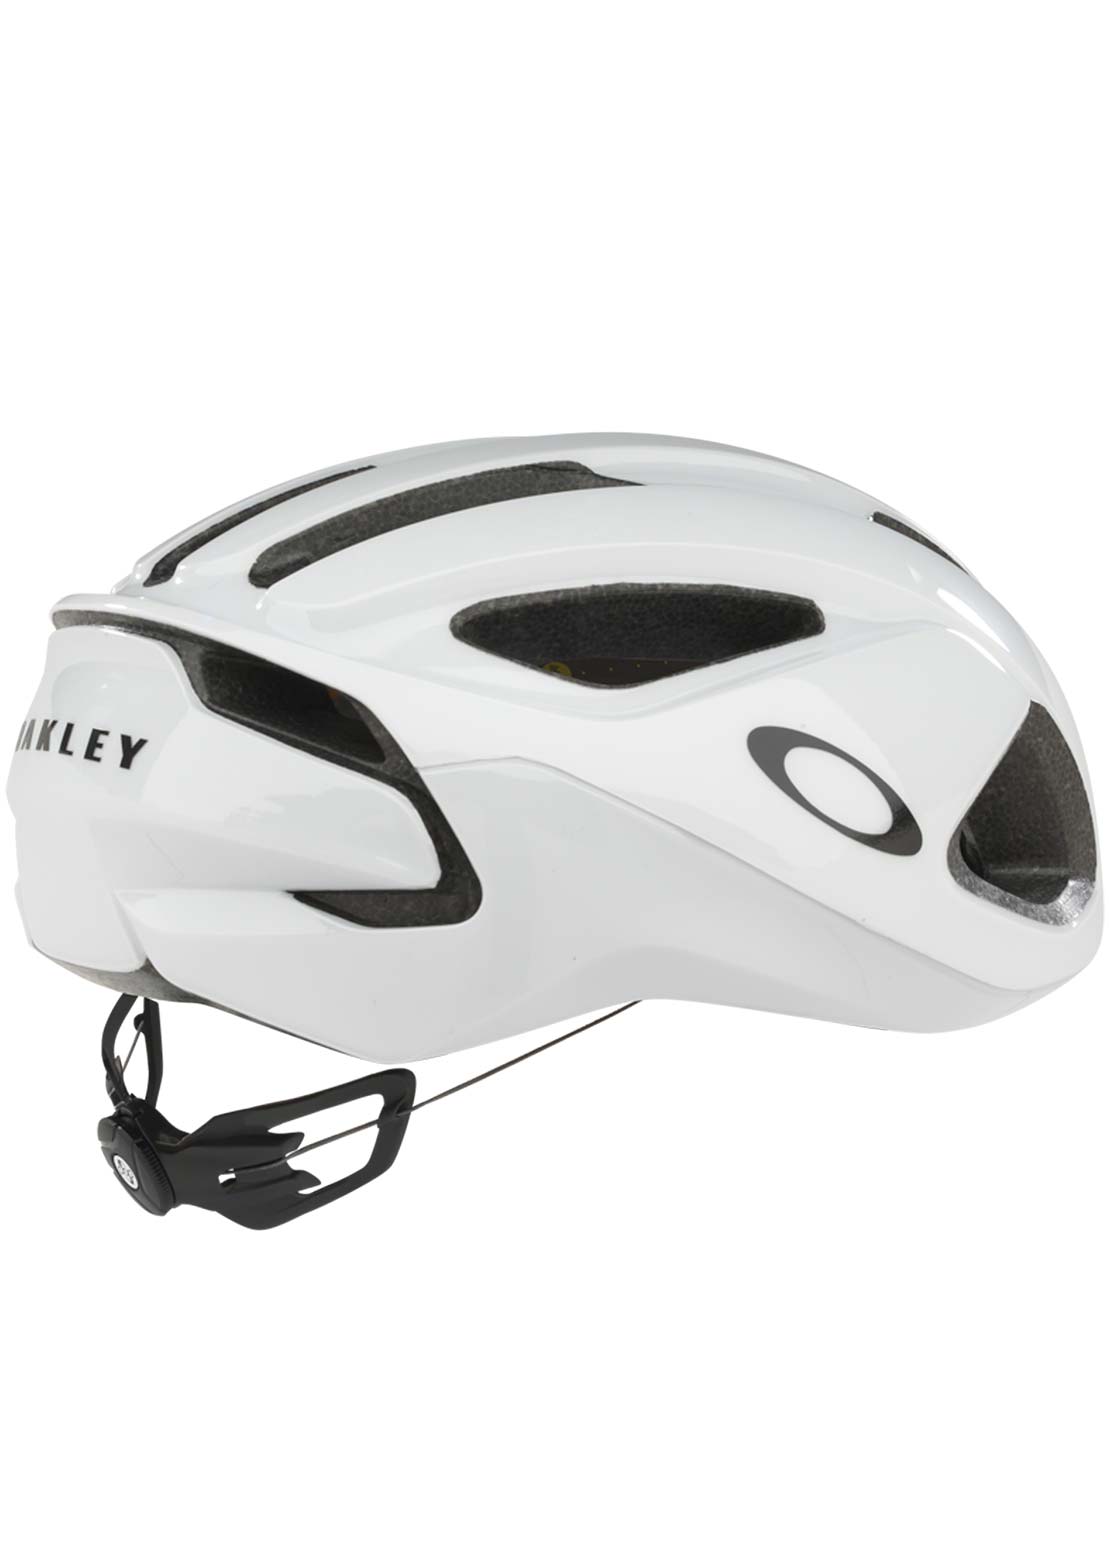 Oakley ARO 3 Mountain Bike Helmet White